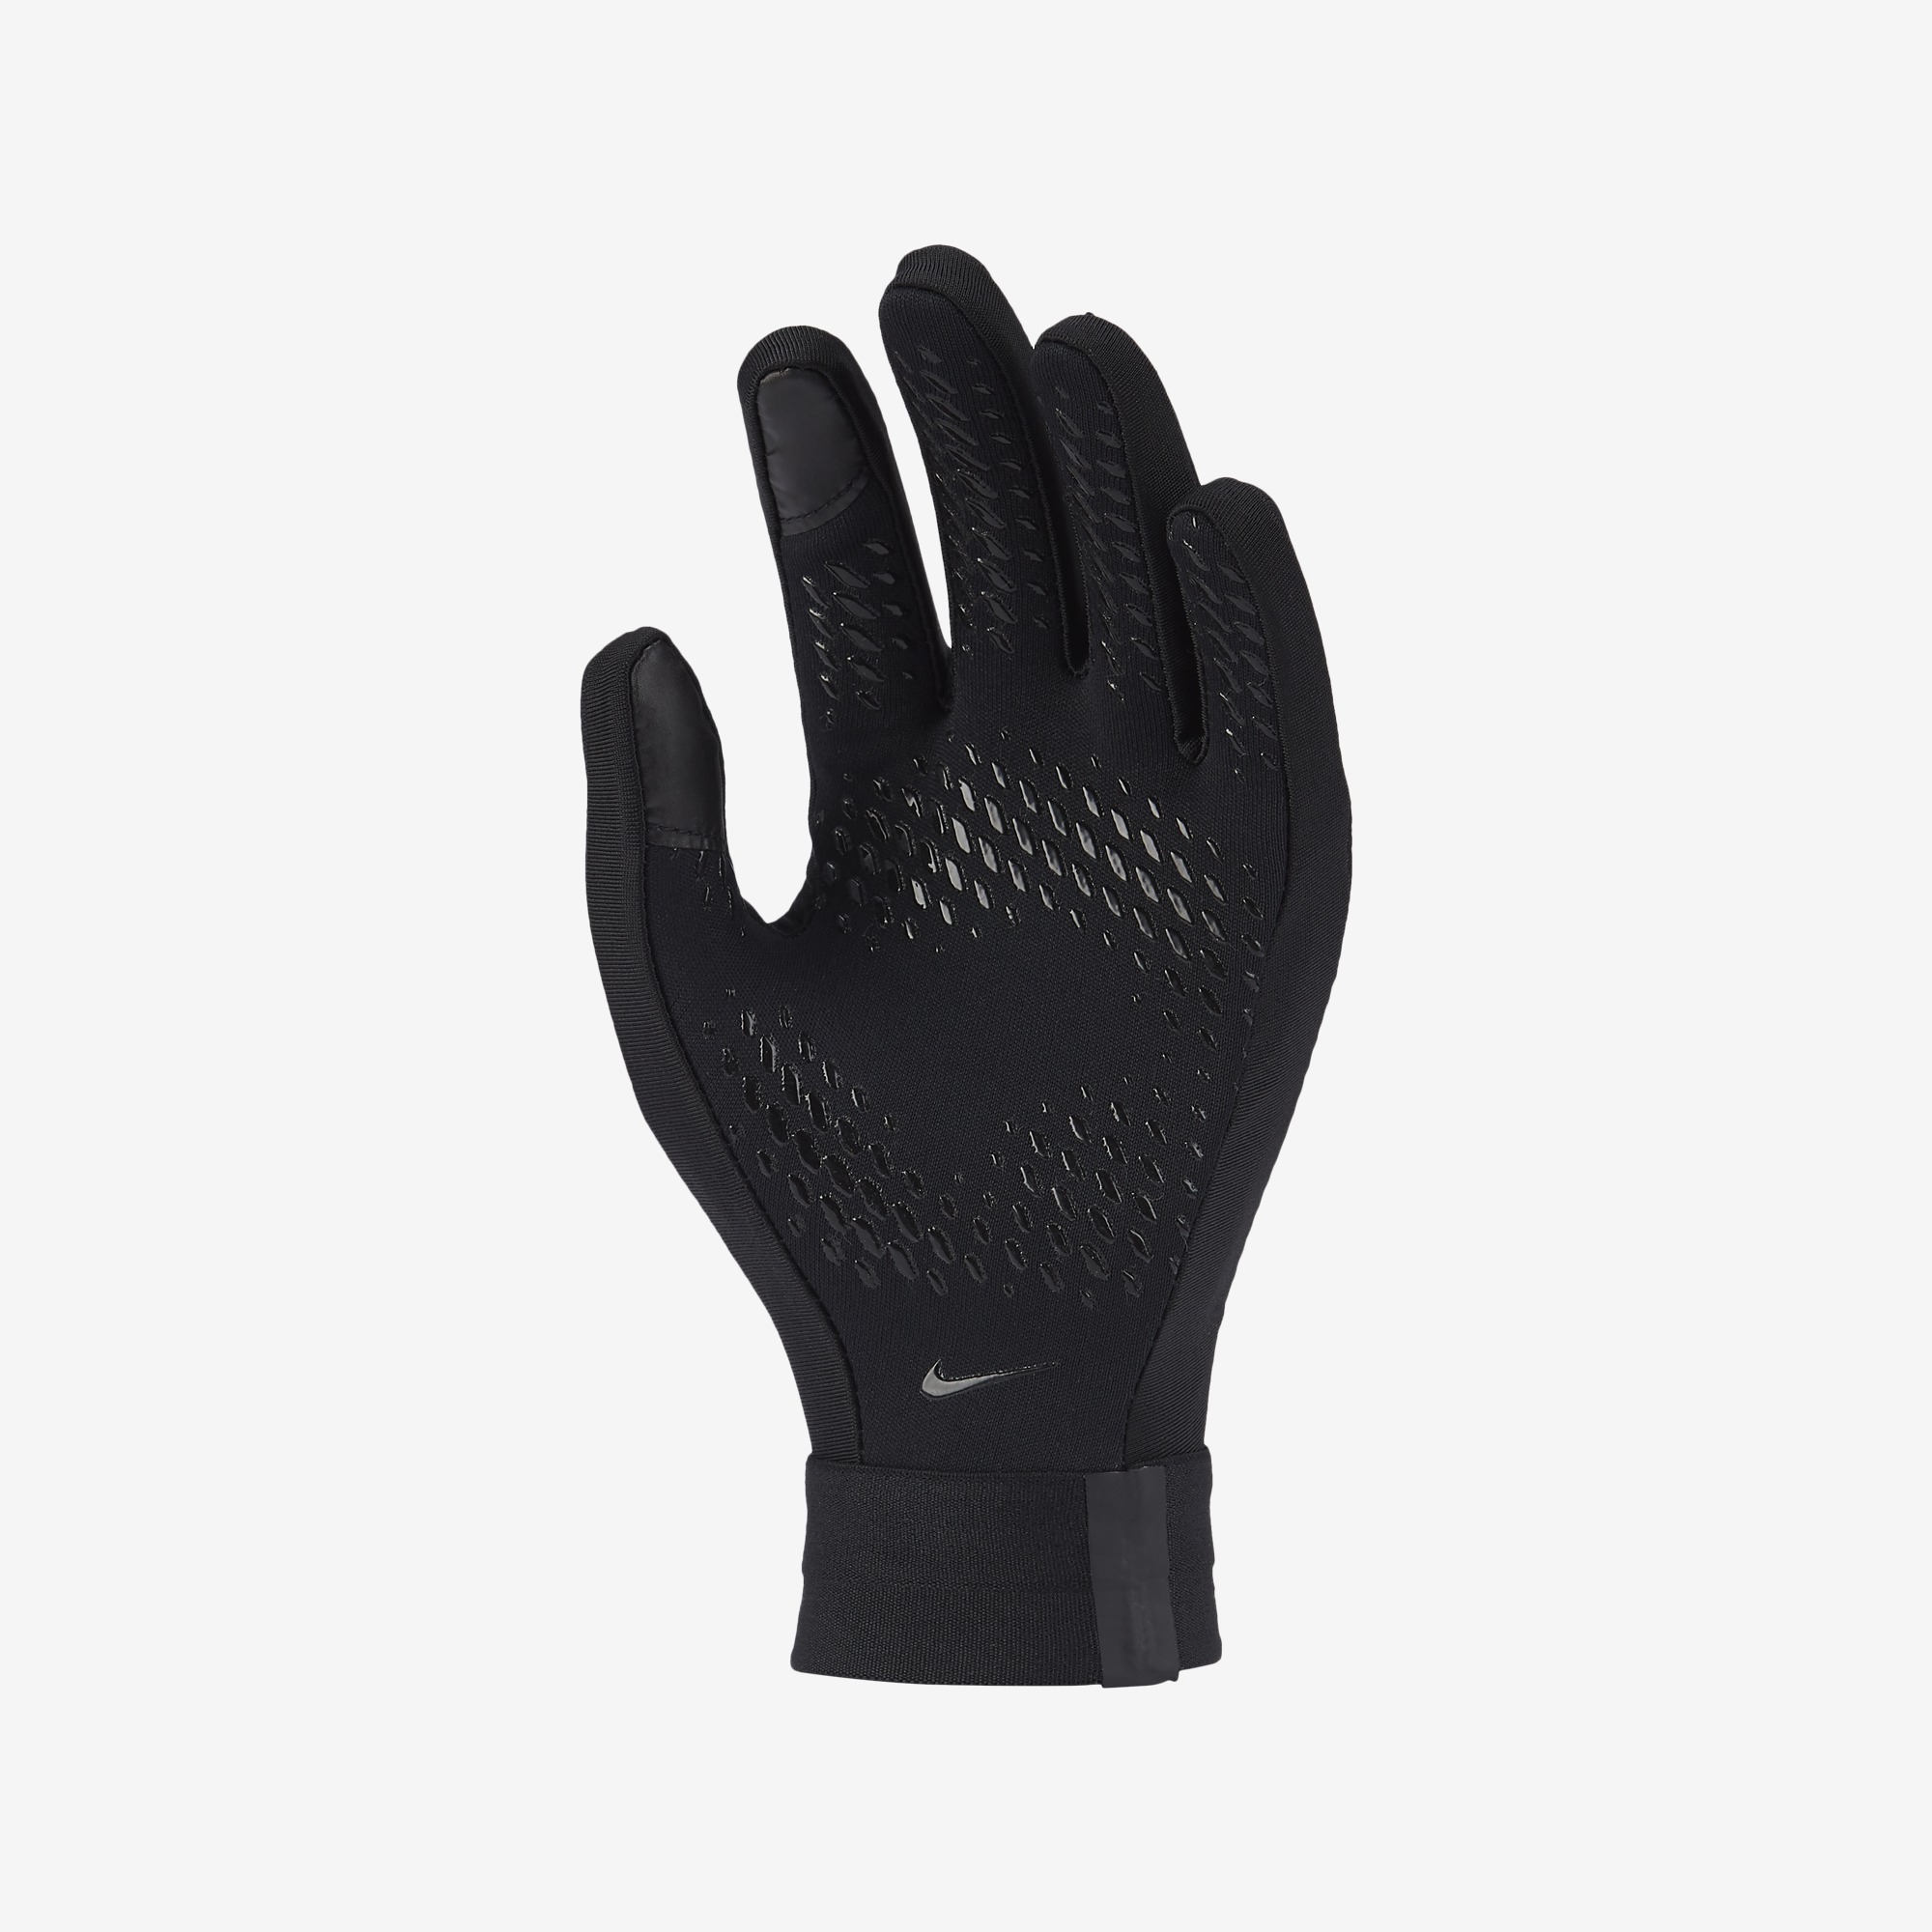 Dicteren verlies mechanisme stefanssoccer.com:Nike Youth Hyperwarm Academy Field Player Gloves - Black